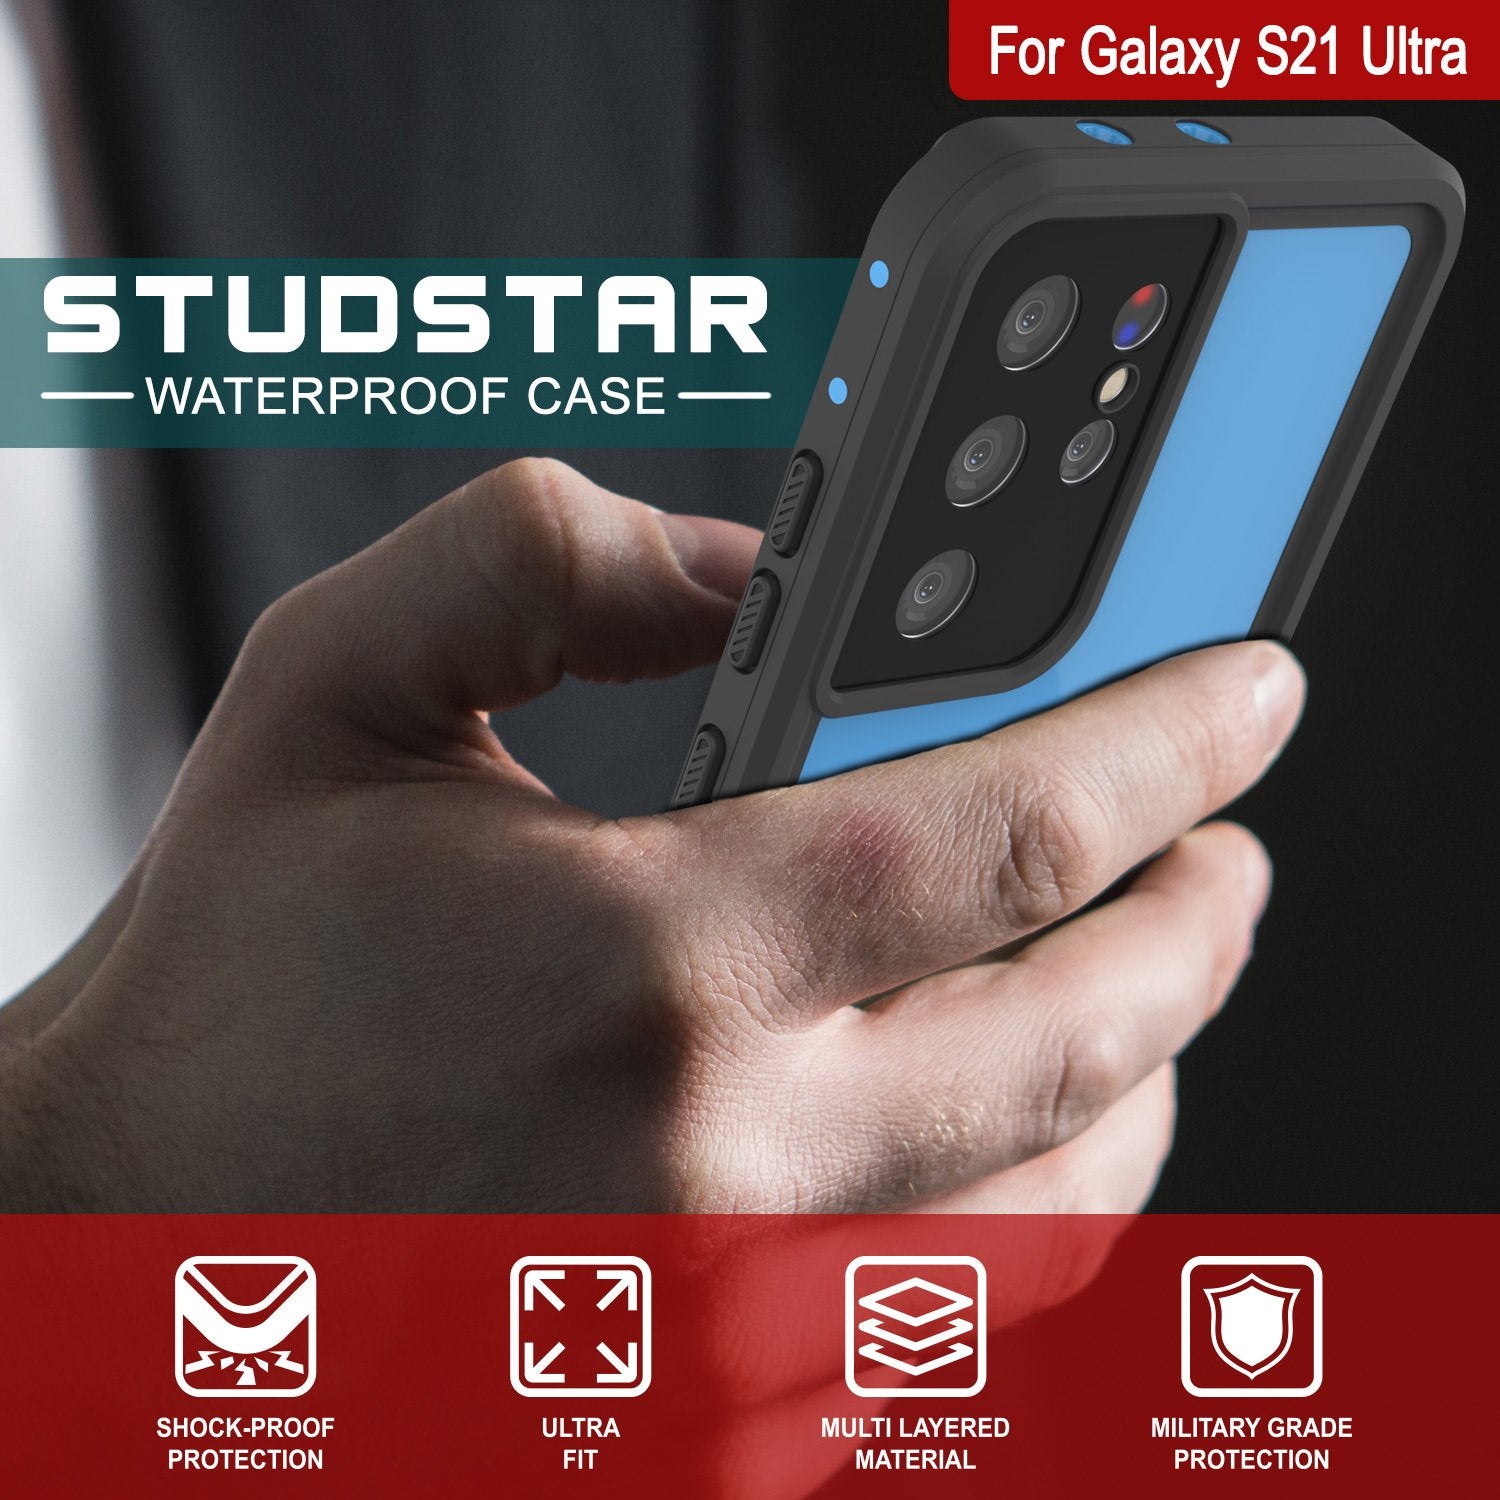 Galaxy S21 Ultra Waterproof Case PunkCase StudStar Light Blue Thin 6.6ft Underwater IP68 ShockProof